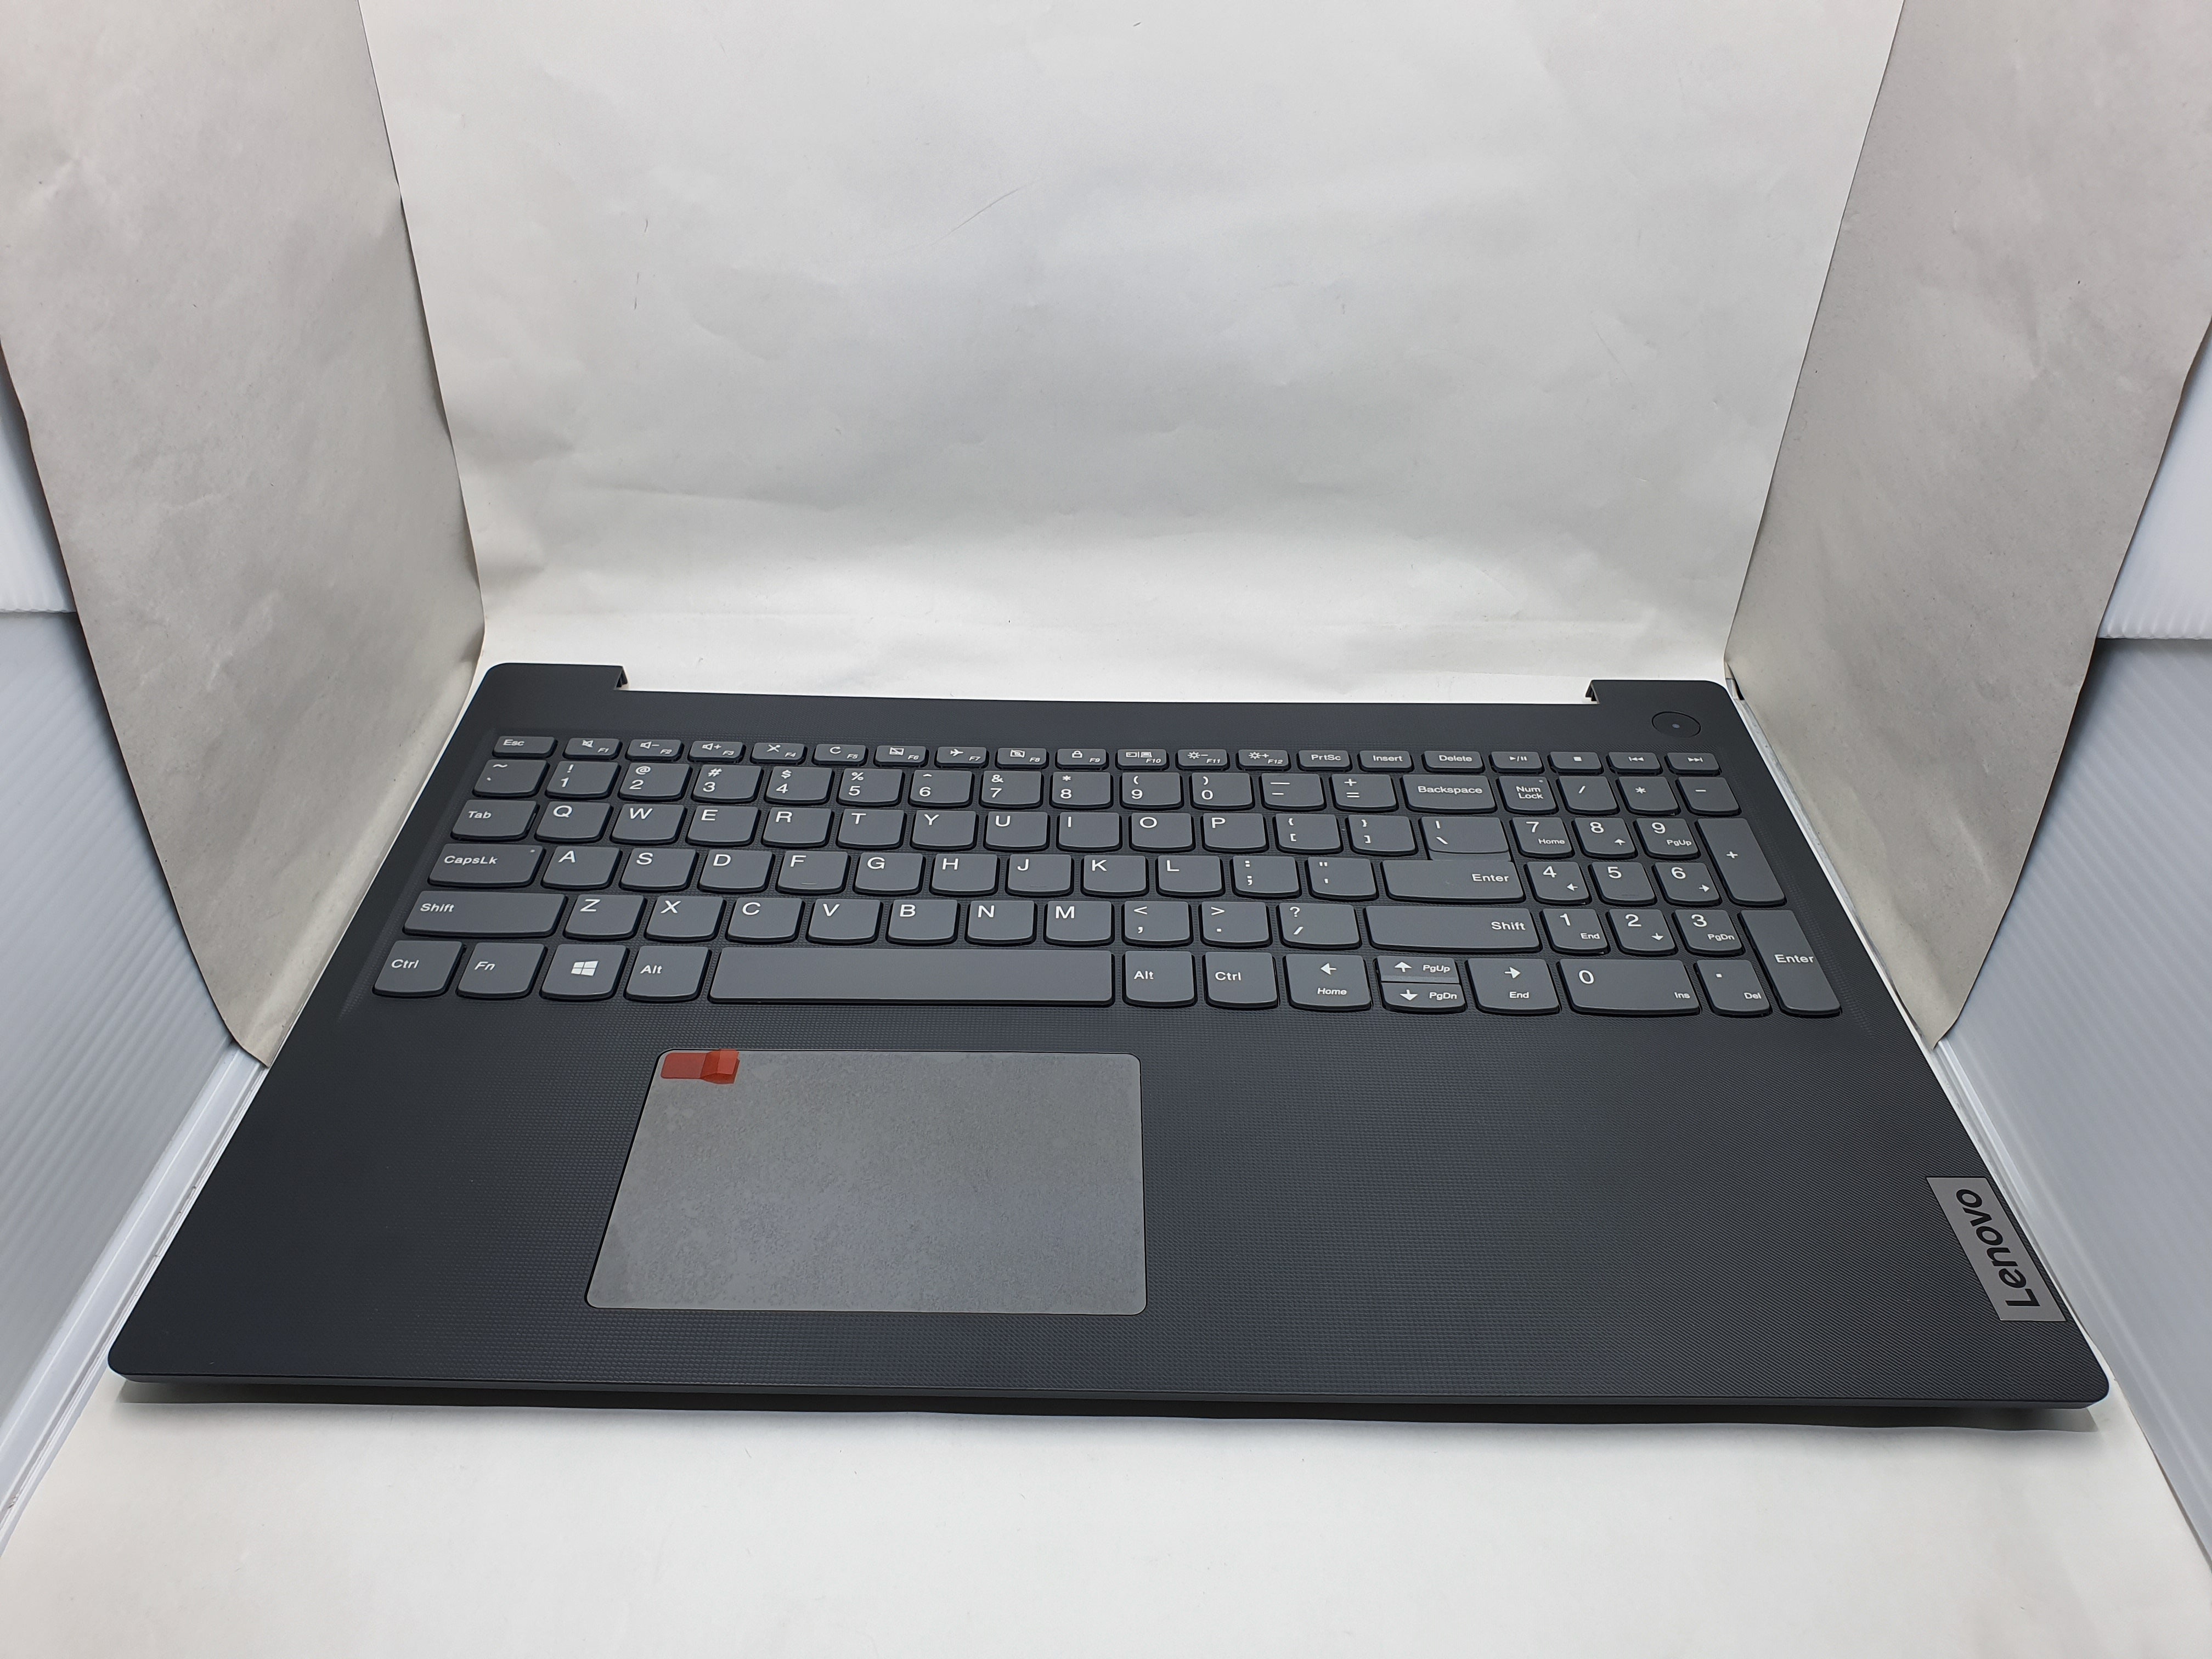 Lenovo Keyboard Ideapad 3-15ARE05 WL for Lenovo IdeaPad 3-15ARE05